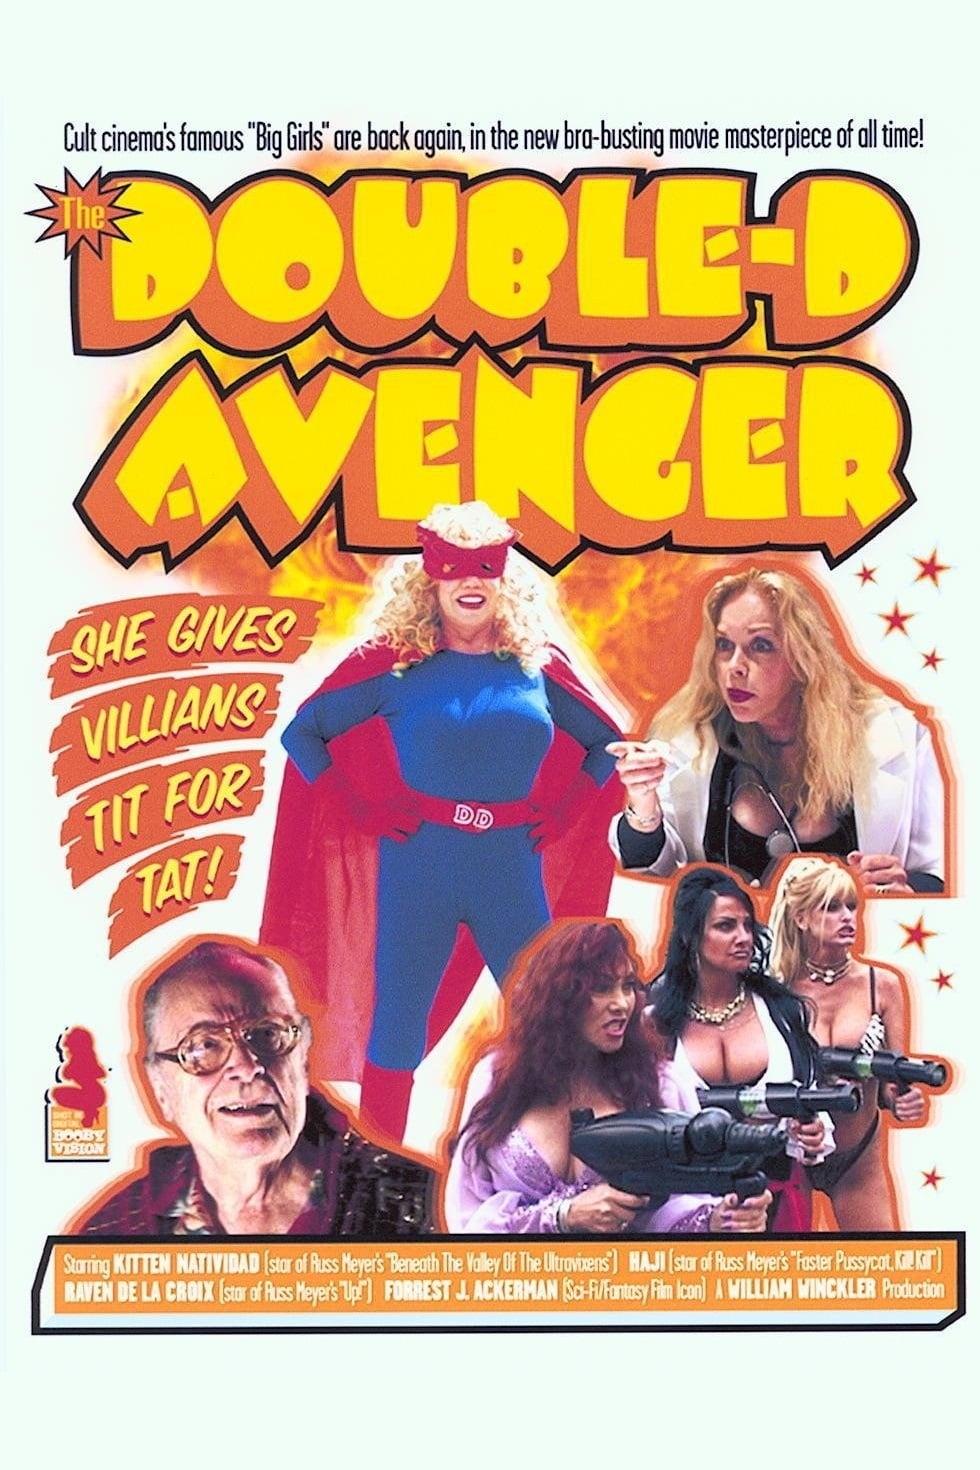 The Double-D Avenger poster